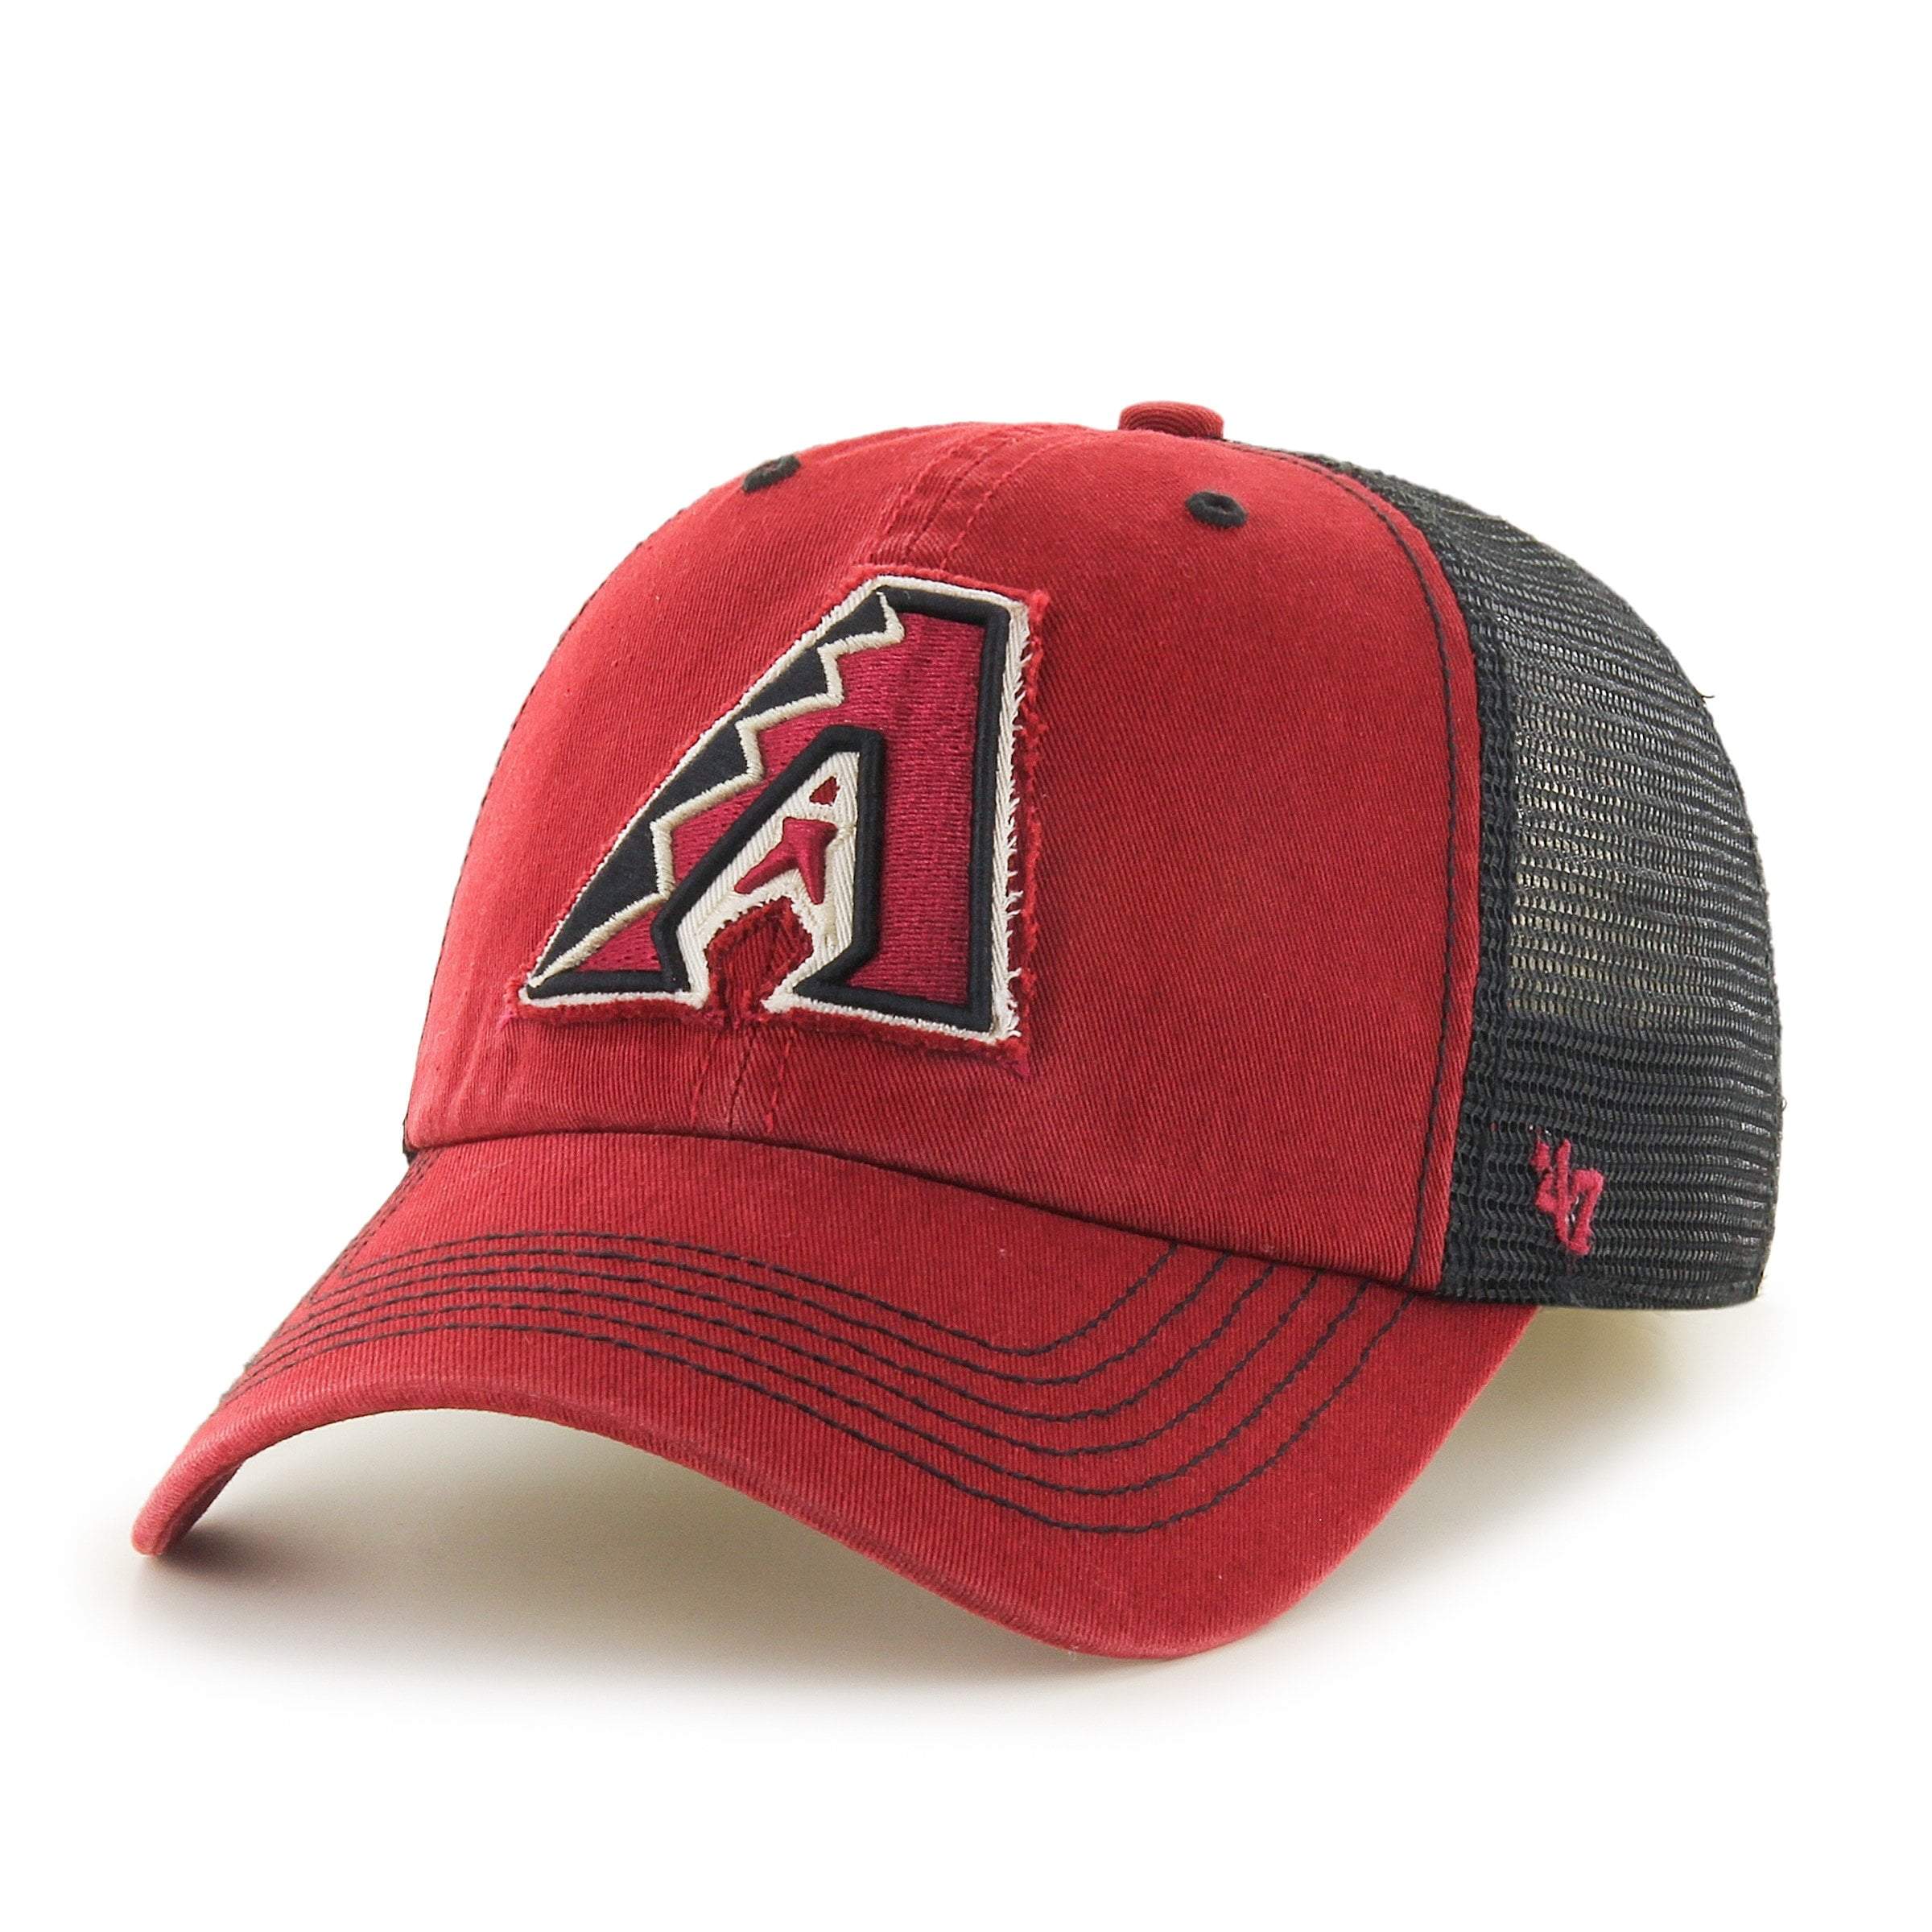 Detroit Red Wings Retro Brand Red Worn Vintage Flexfit Slouch Hat Cap